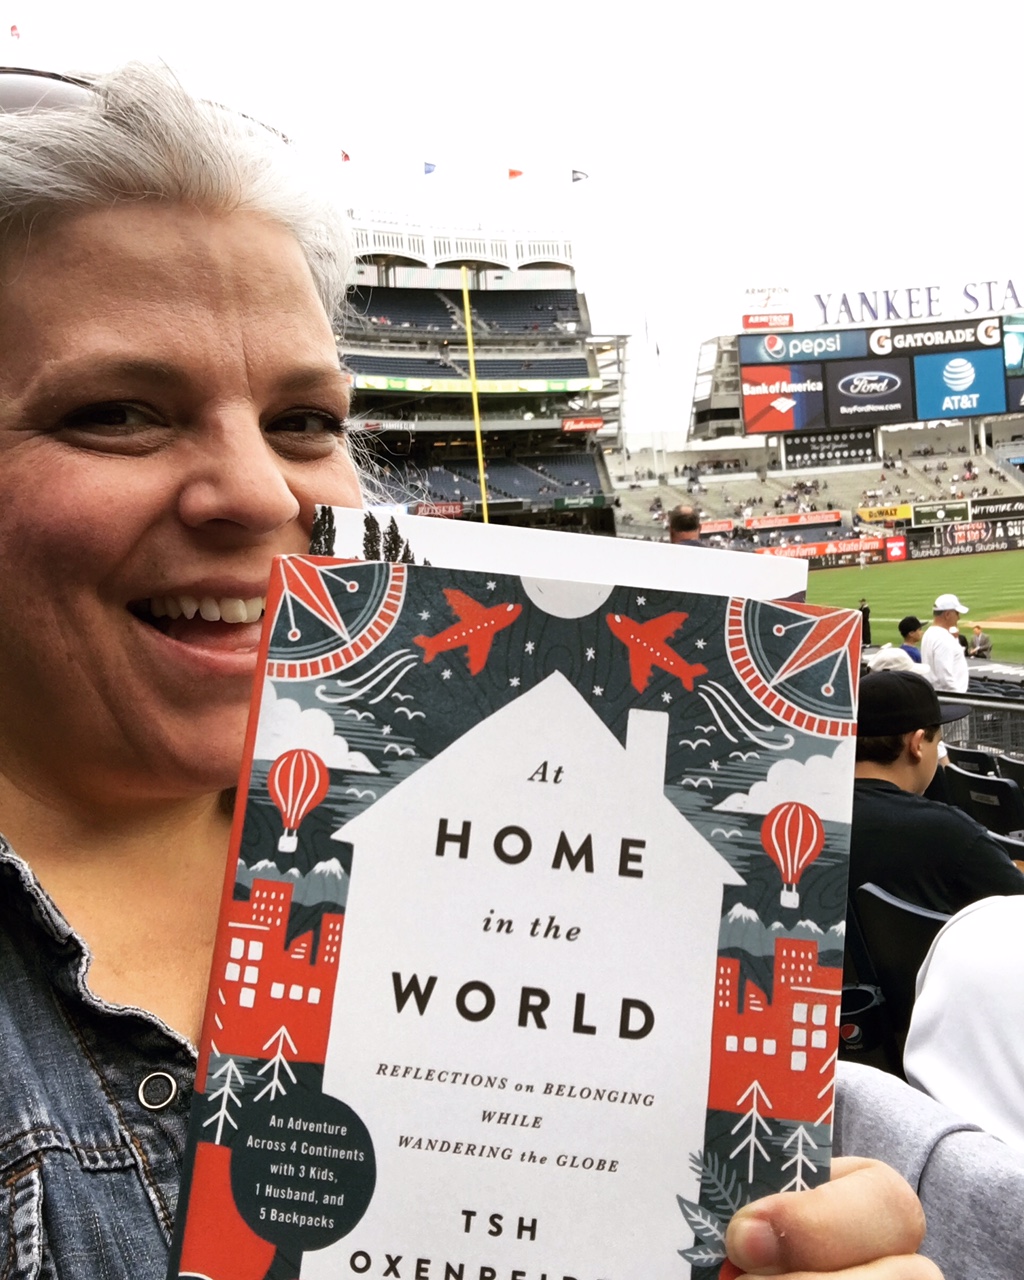 Reading at Yankee stadium